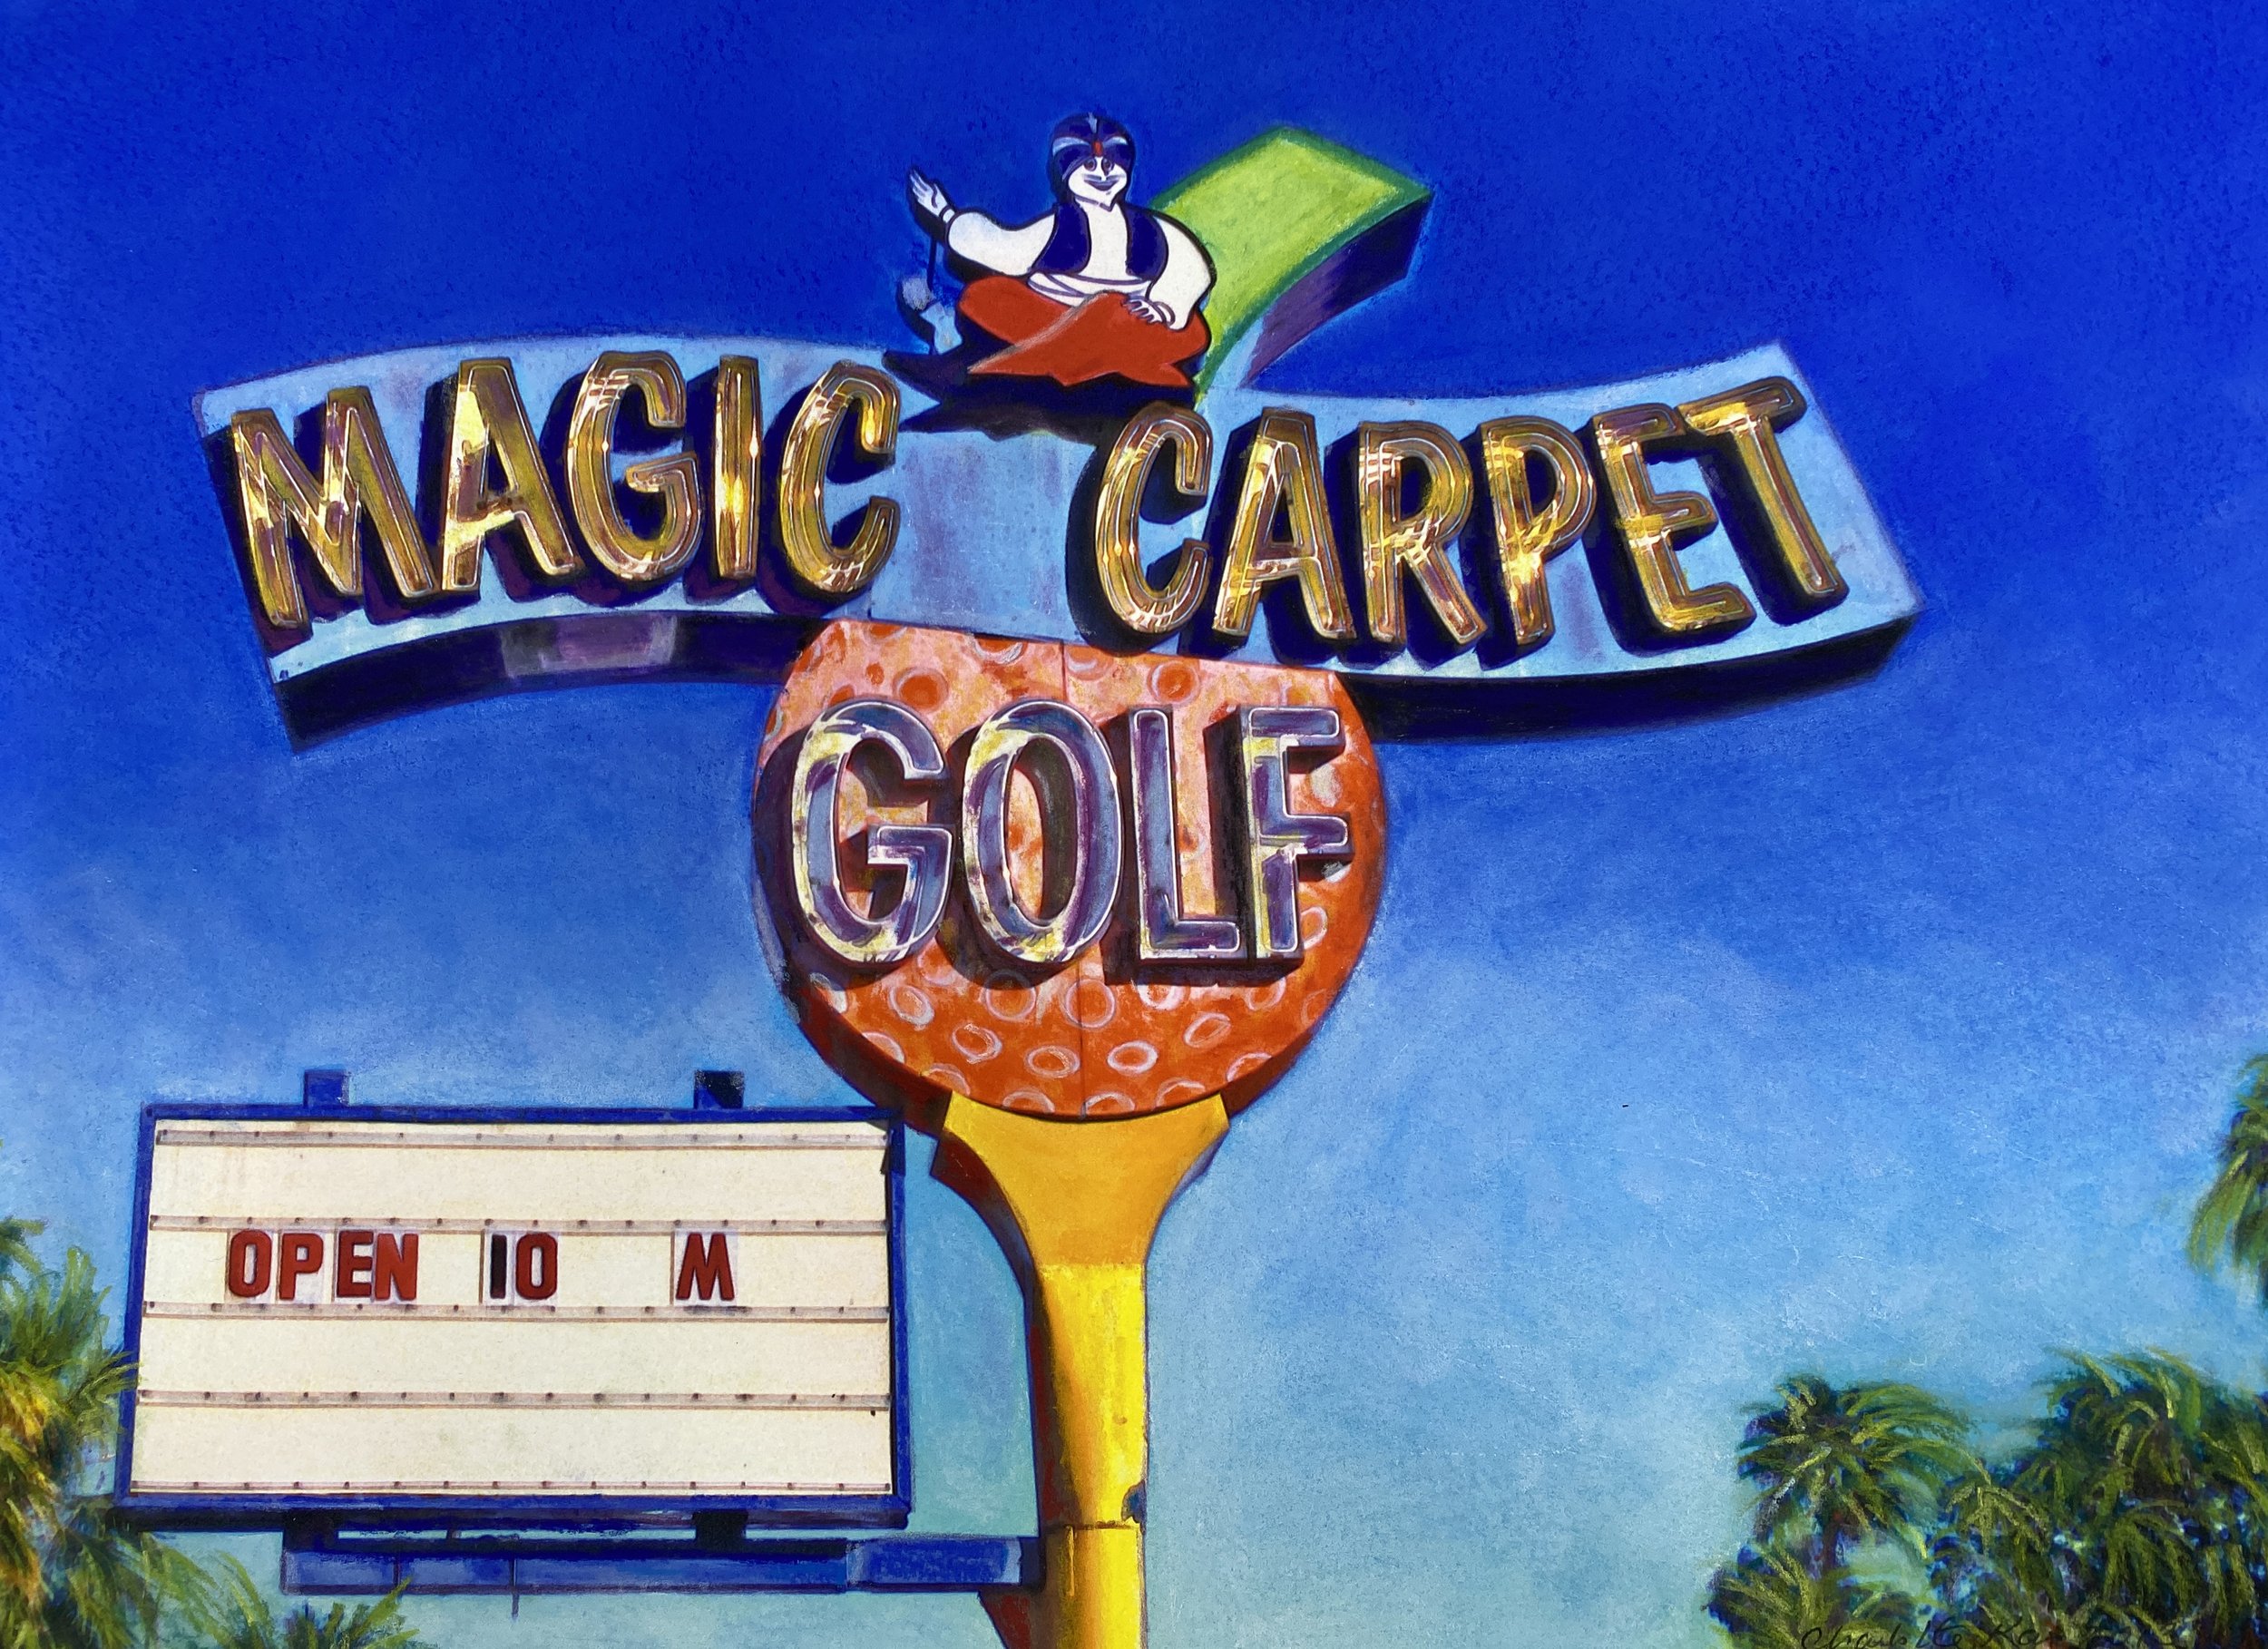 Magic Carpet Golf by Charlotte Kay